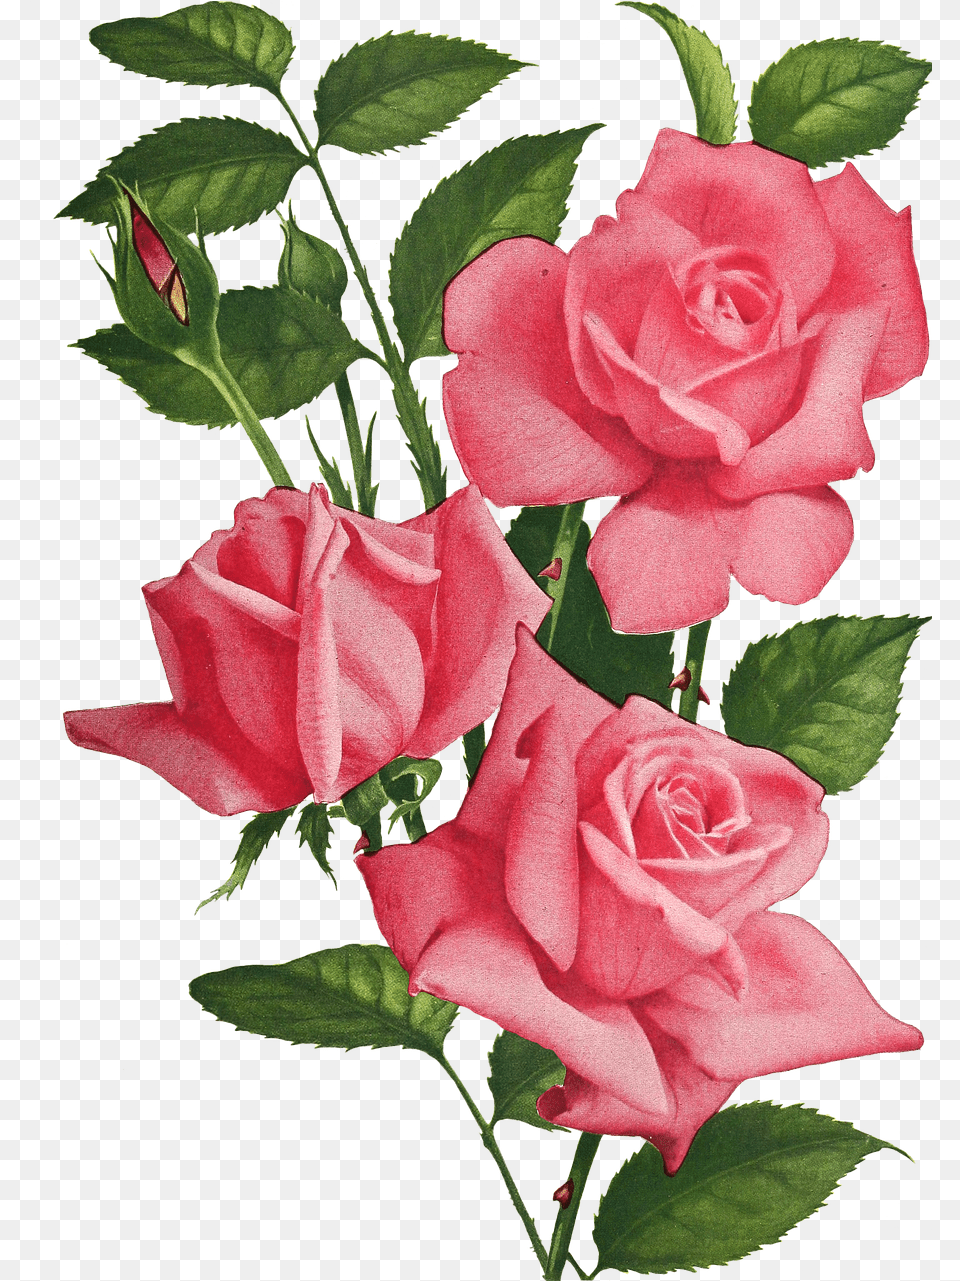 Vintage Roses Flowers Imgenes De Rosas Y Flores, Flower, Plant, Rose Free Png